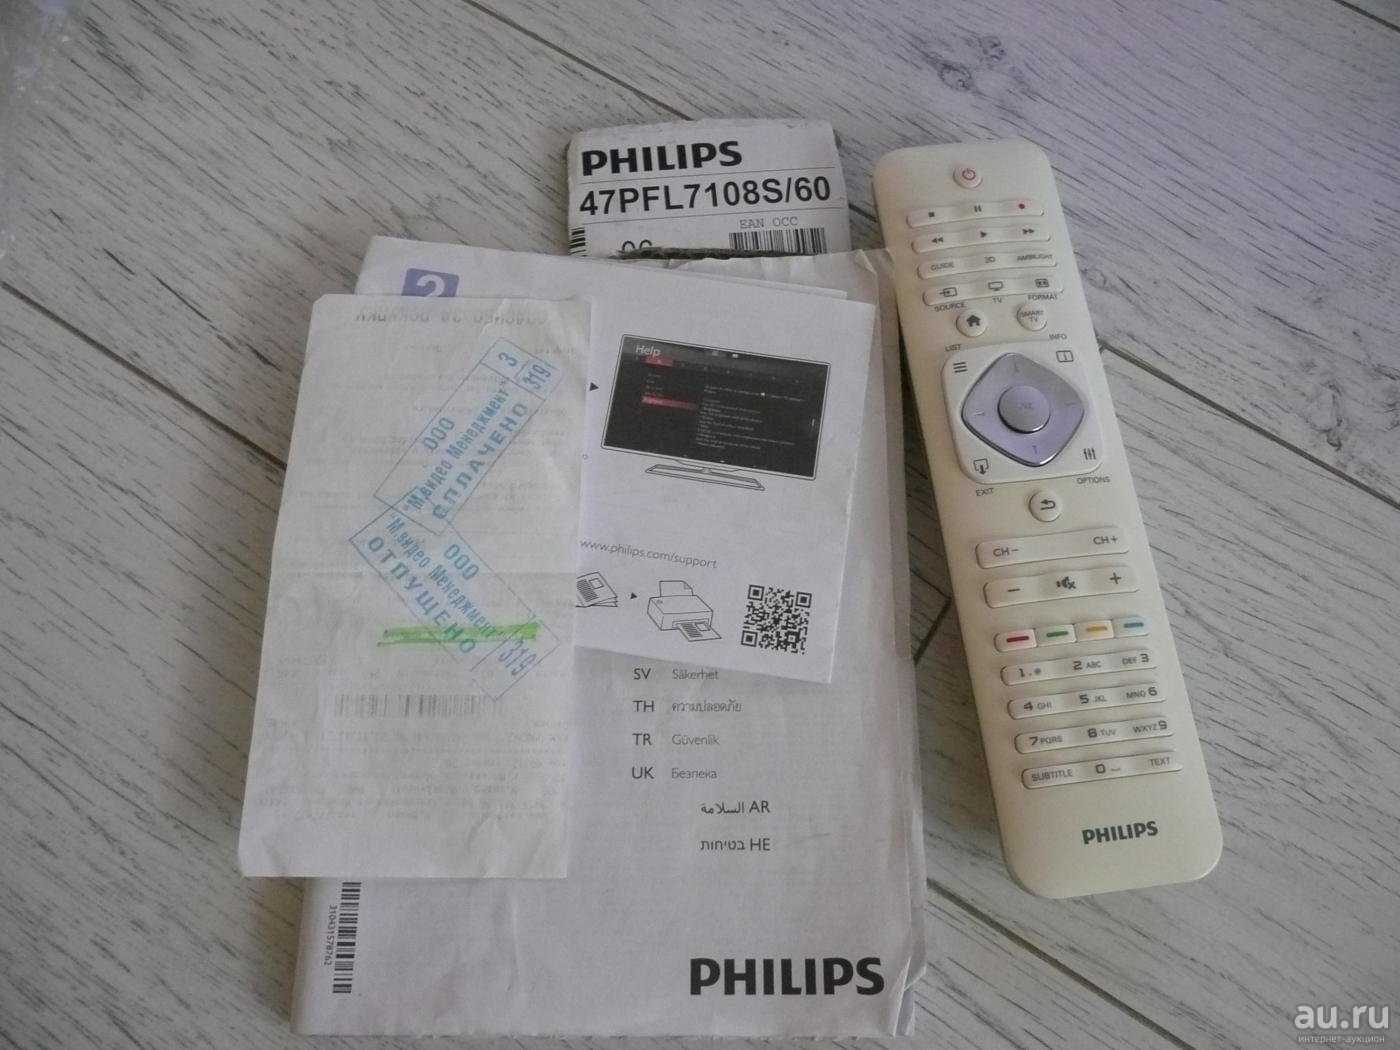 Philips 47pfl7108s